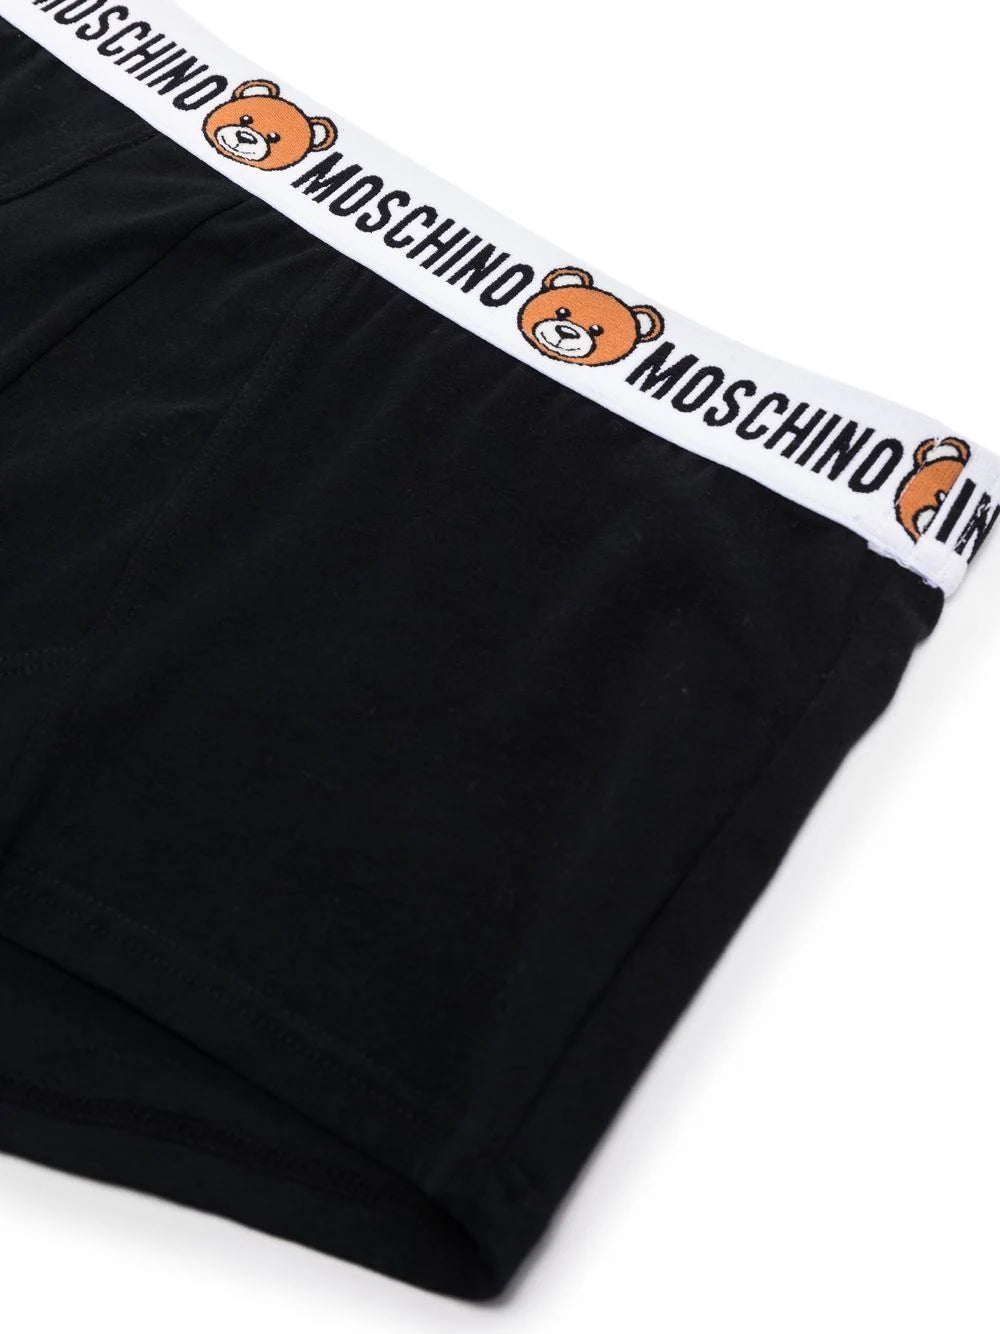 Moschino Black Bi-Pack Teddy Logo Boxers